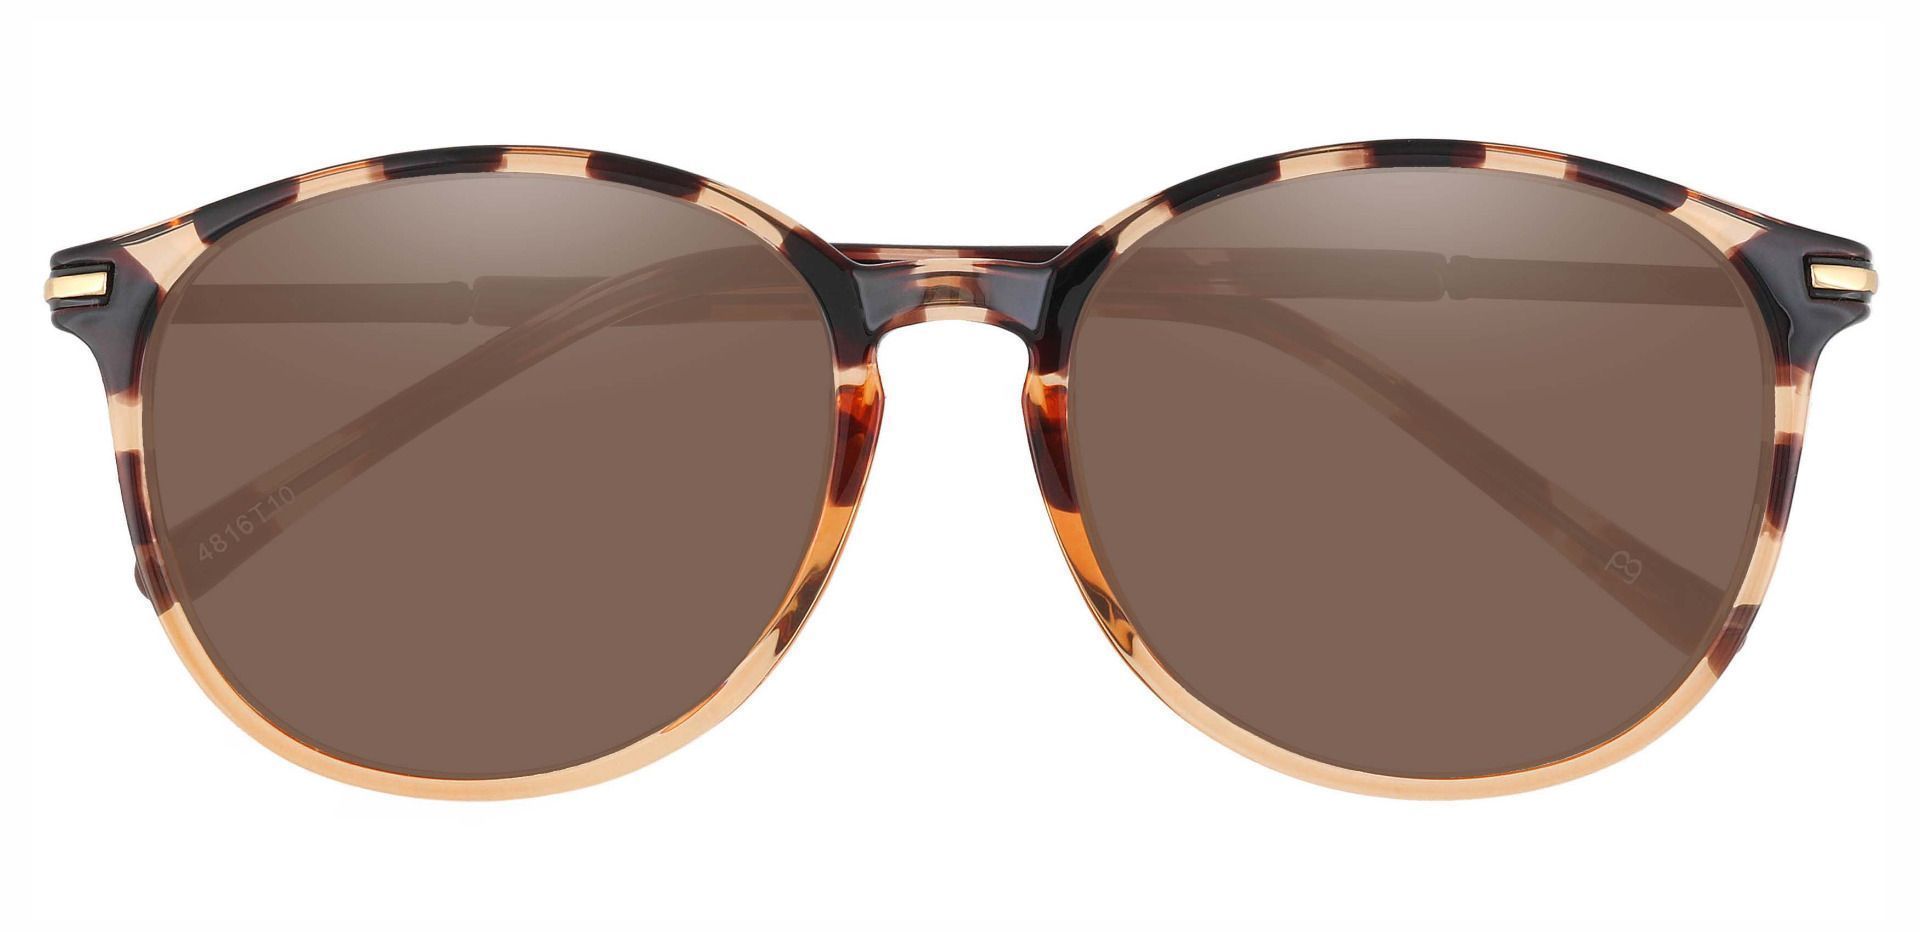 Danbury Oval Prescription Sunglasses - Tortoise Frame With Brown Lenses